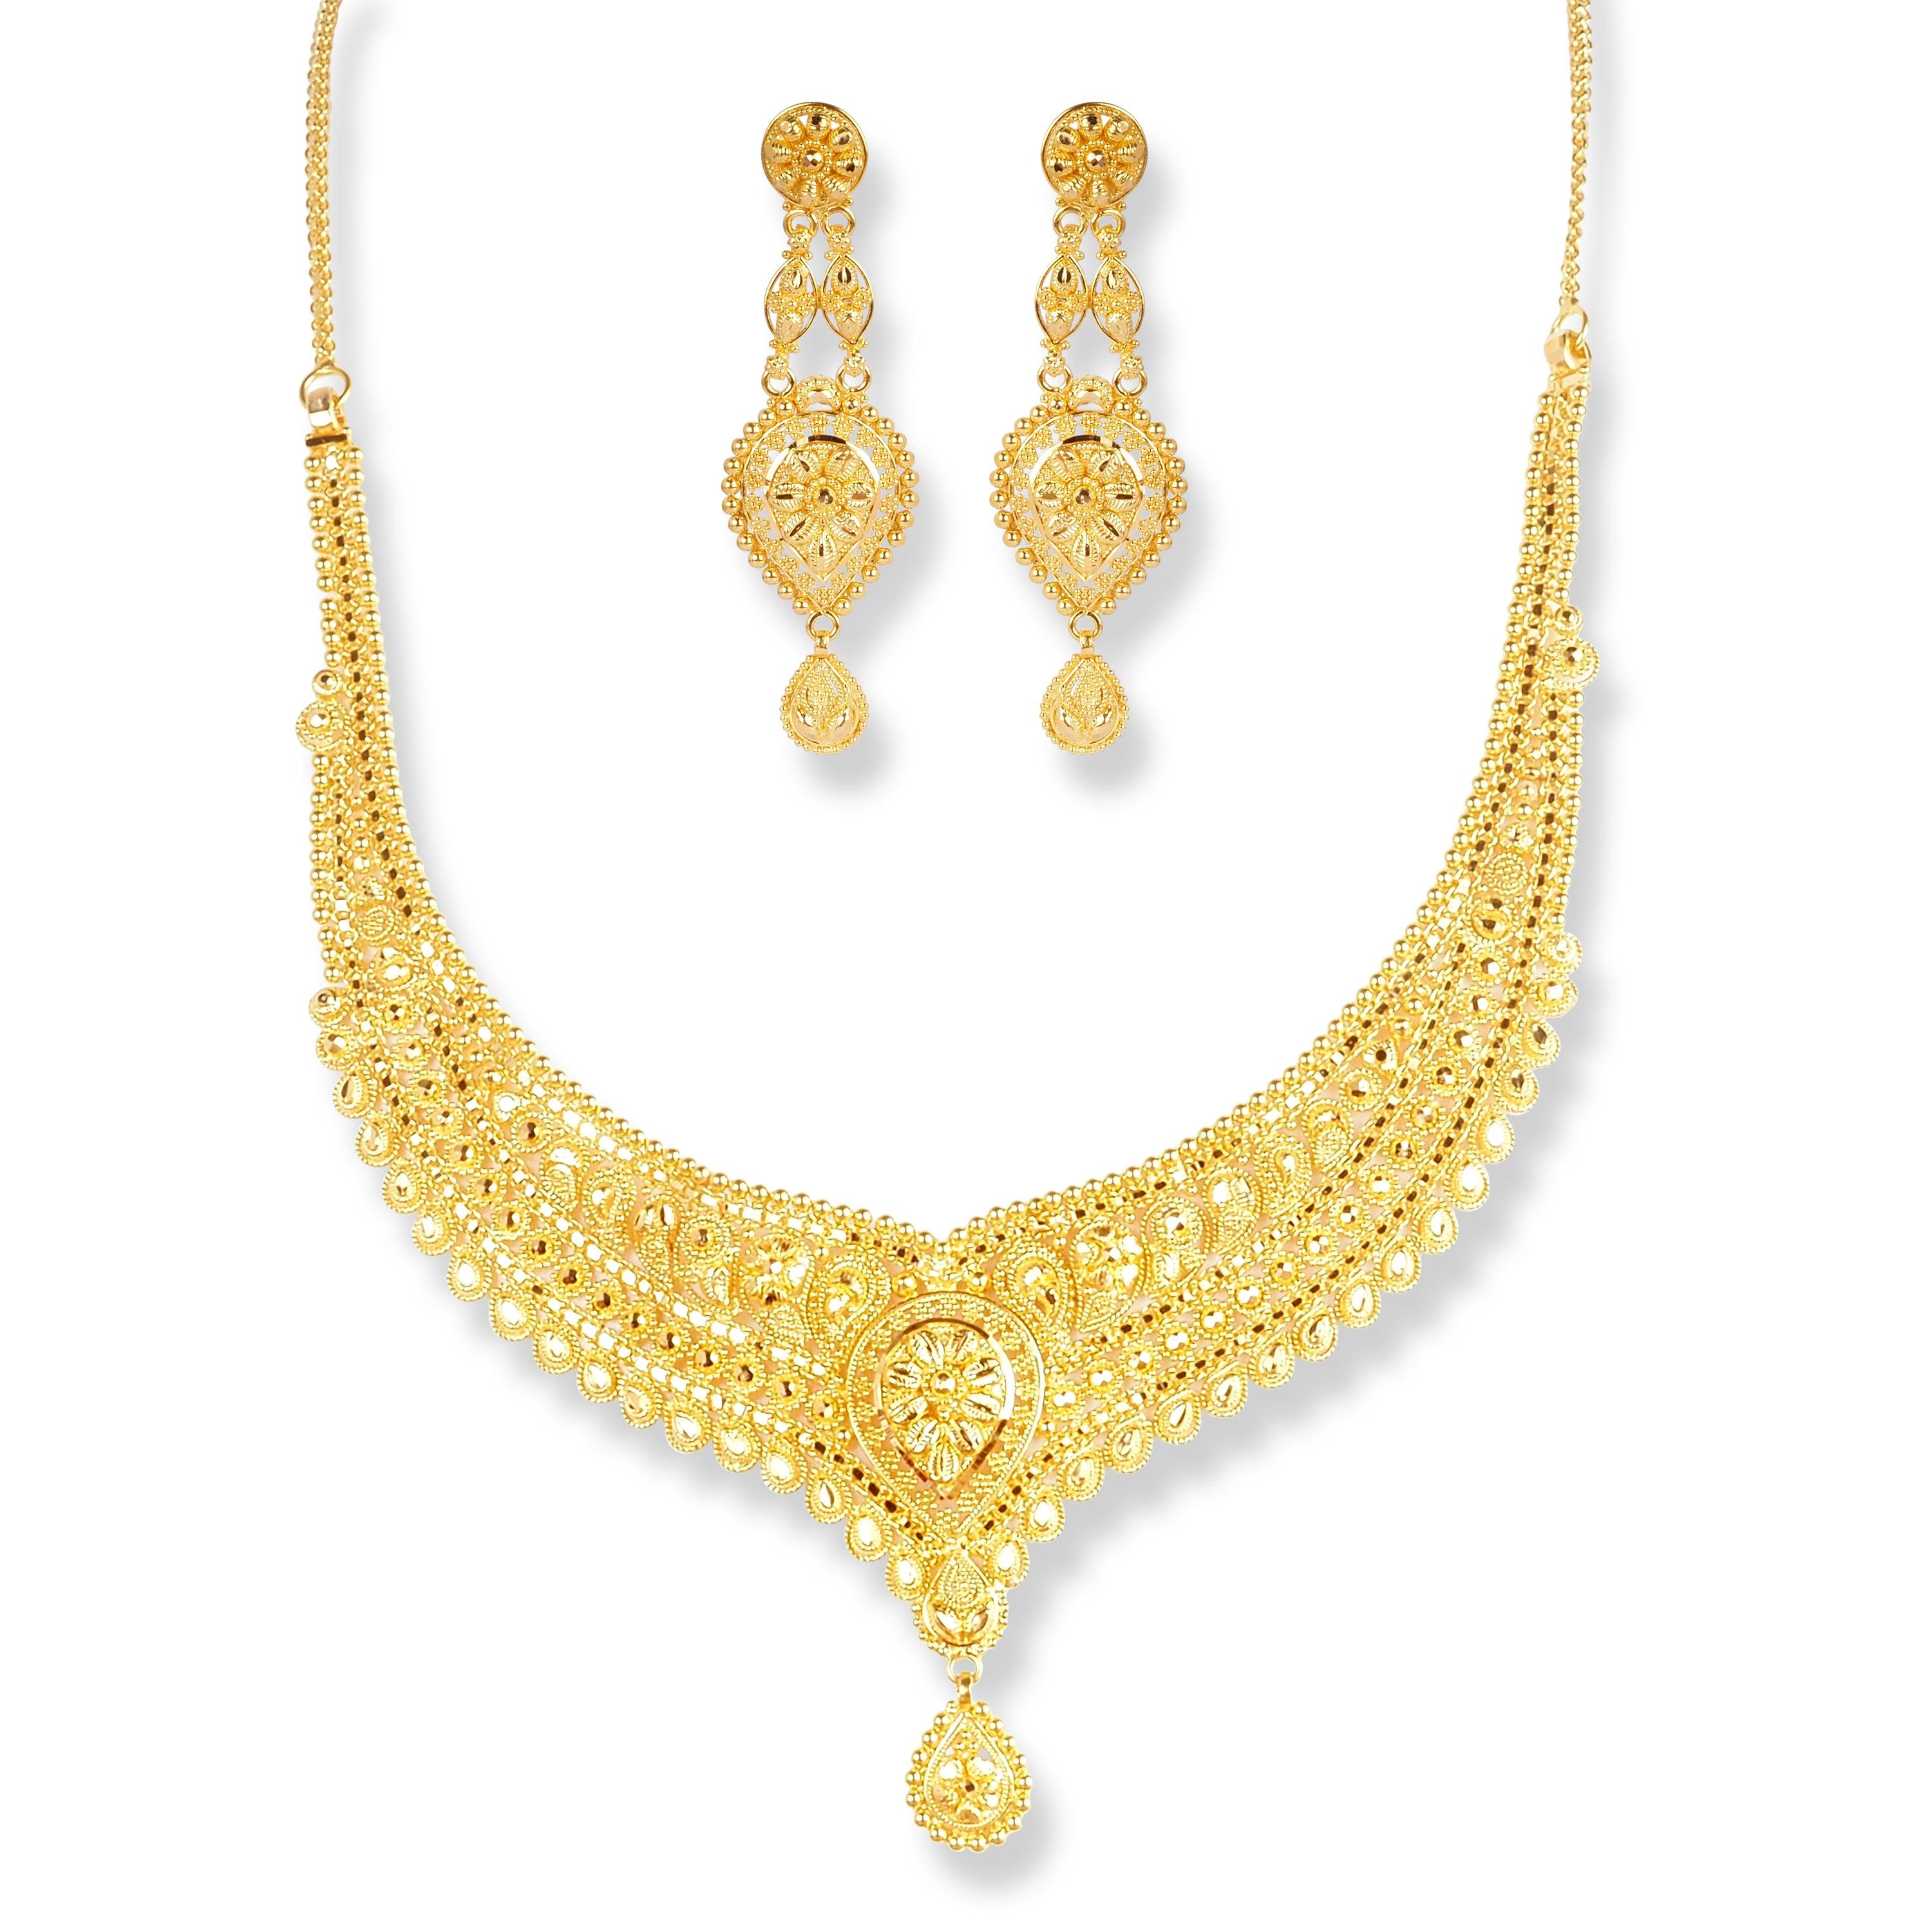 22ct Gold Set with Graduated Filigree Design and '' U '' Hook Clasp N-7924 - Minar Jewellers